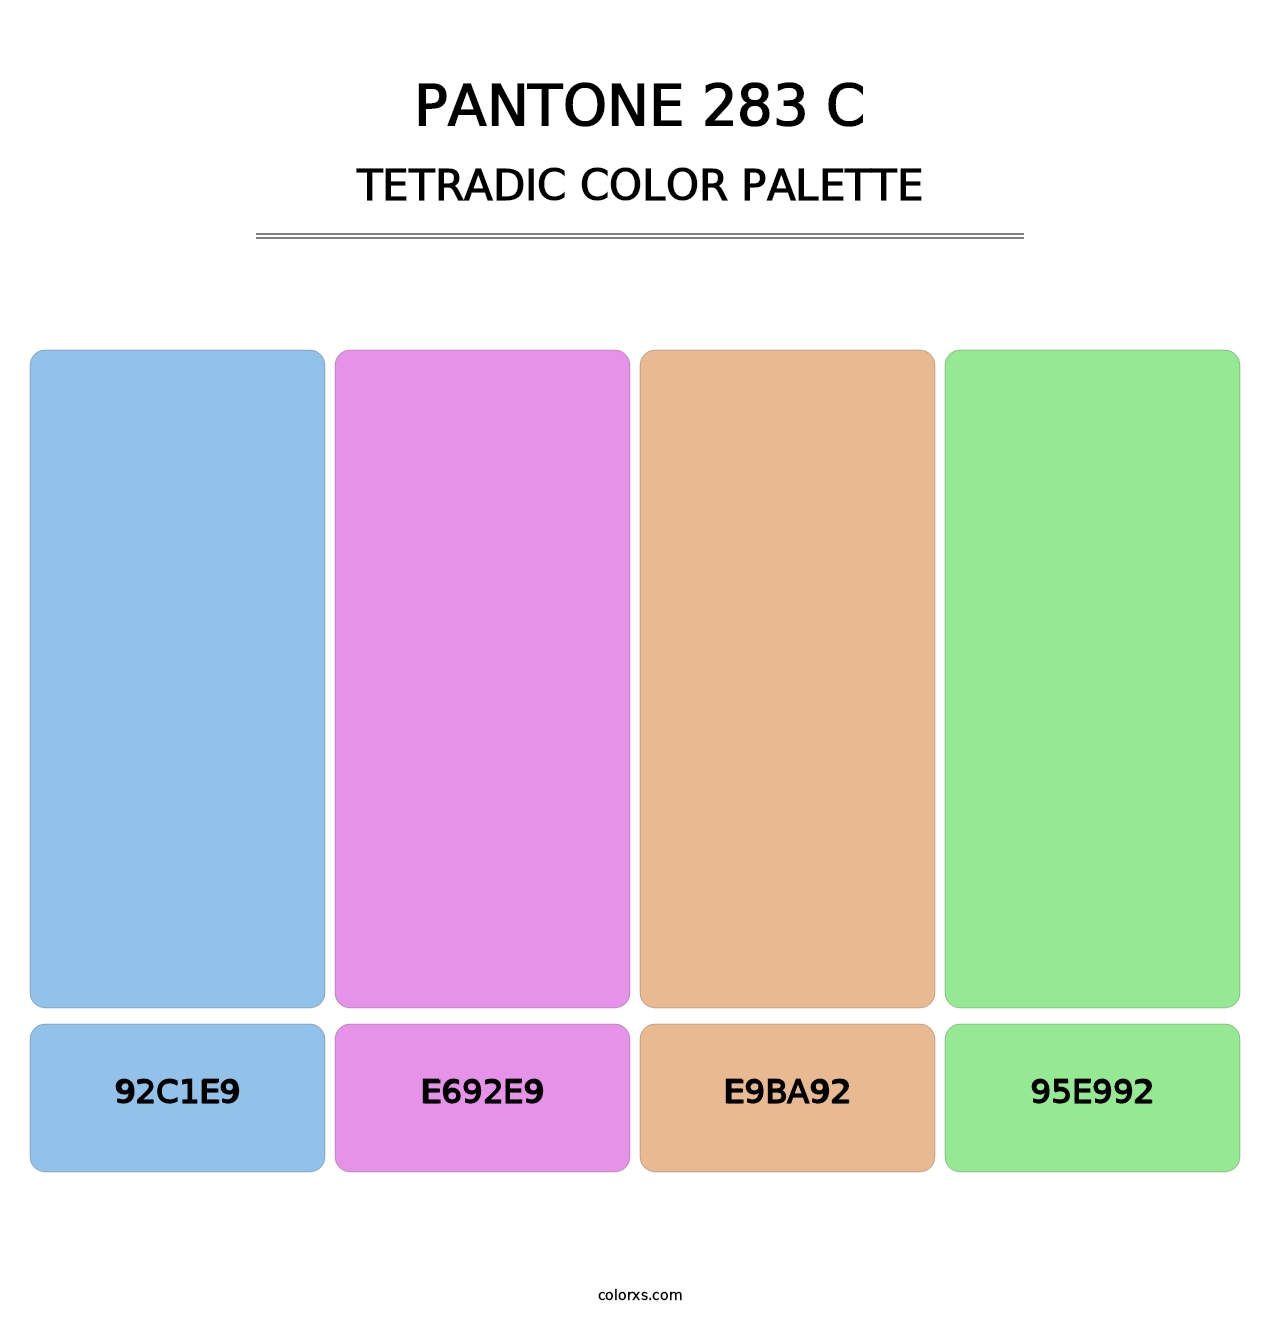 PANTONE 283 C - Tetradic Color Palette